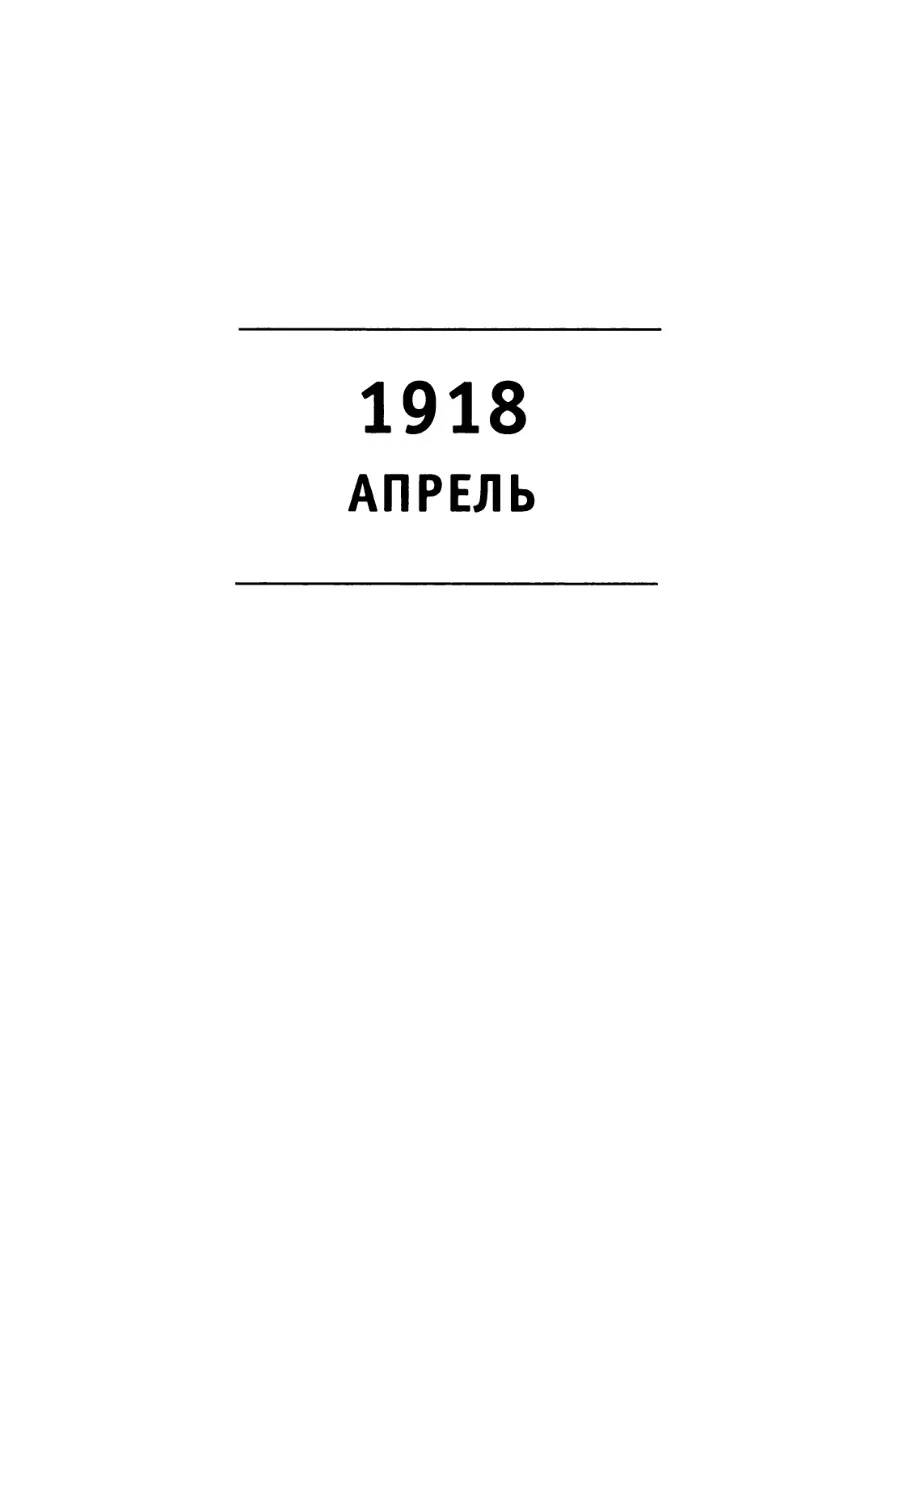 1918 Апрель